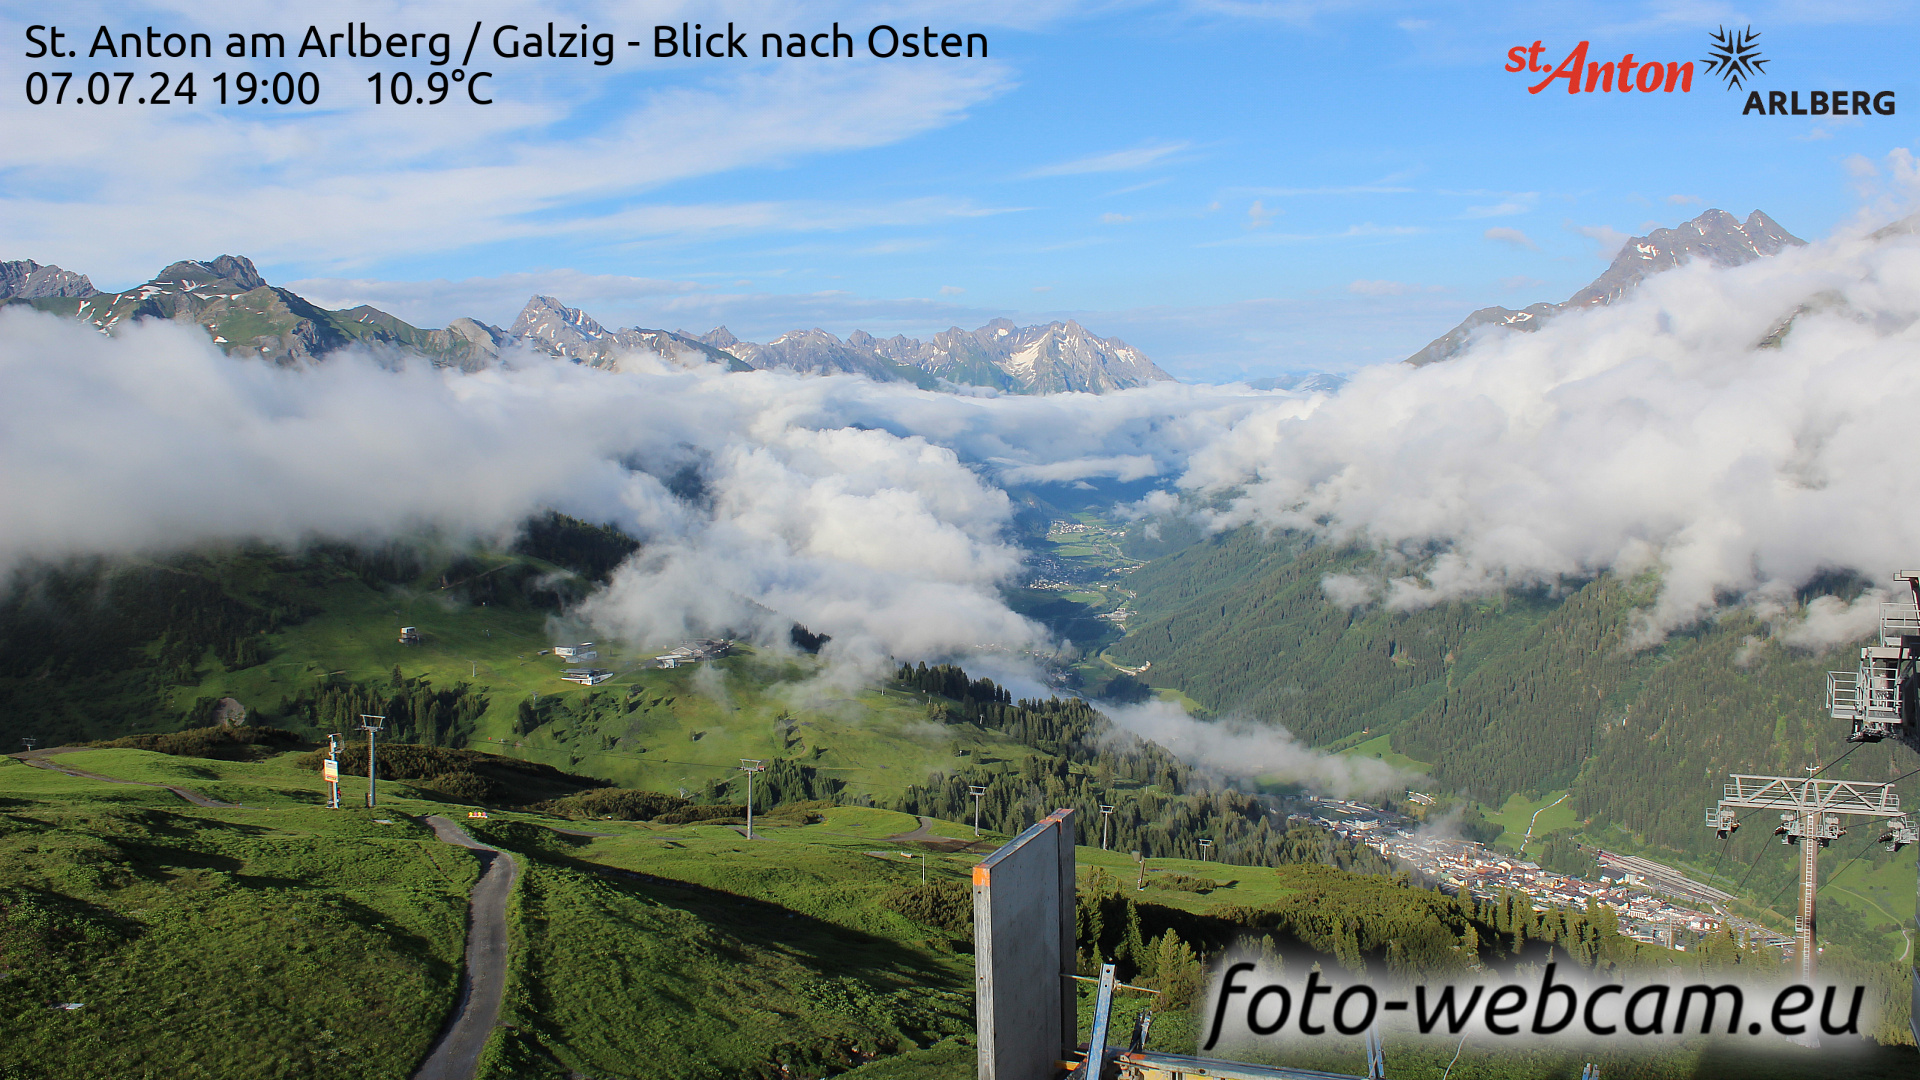 St. Anton am Arlberg Thu. 19:01